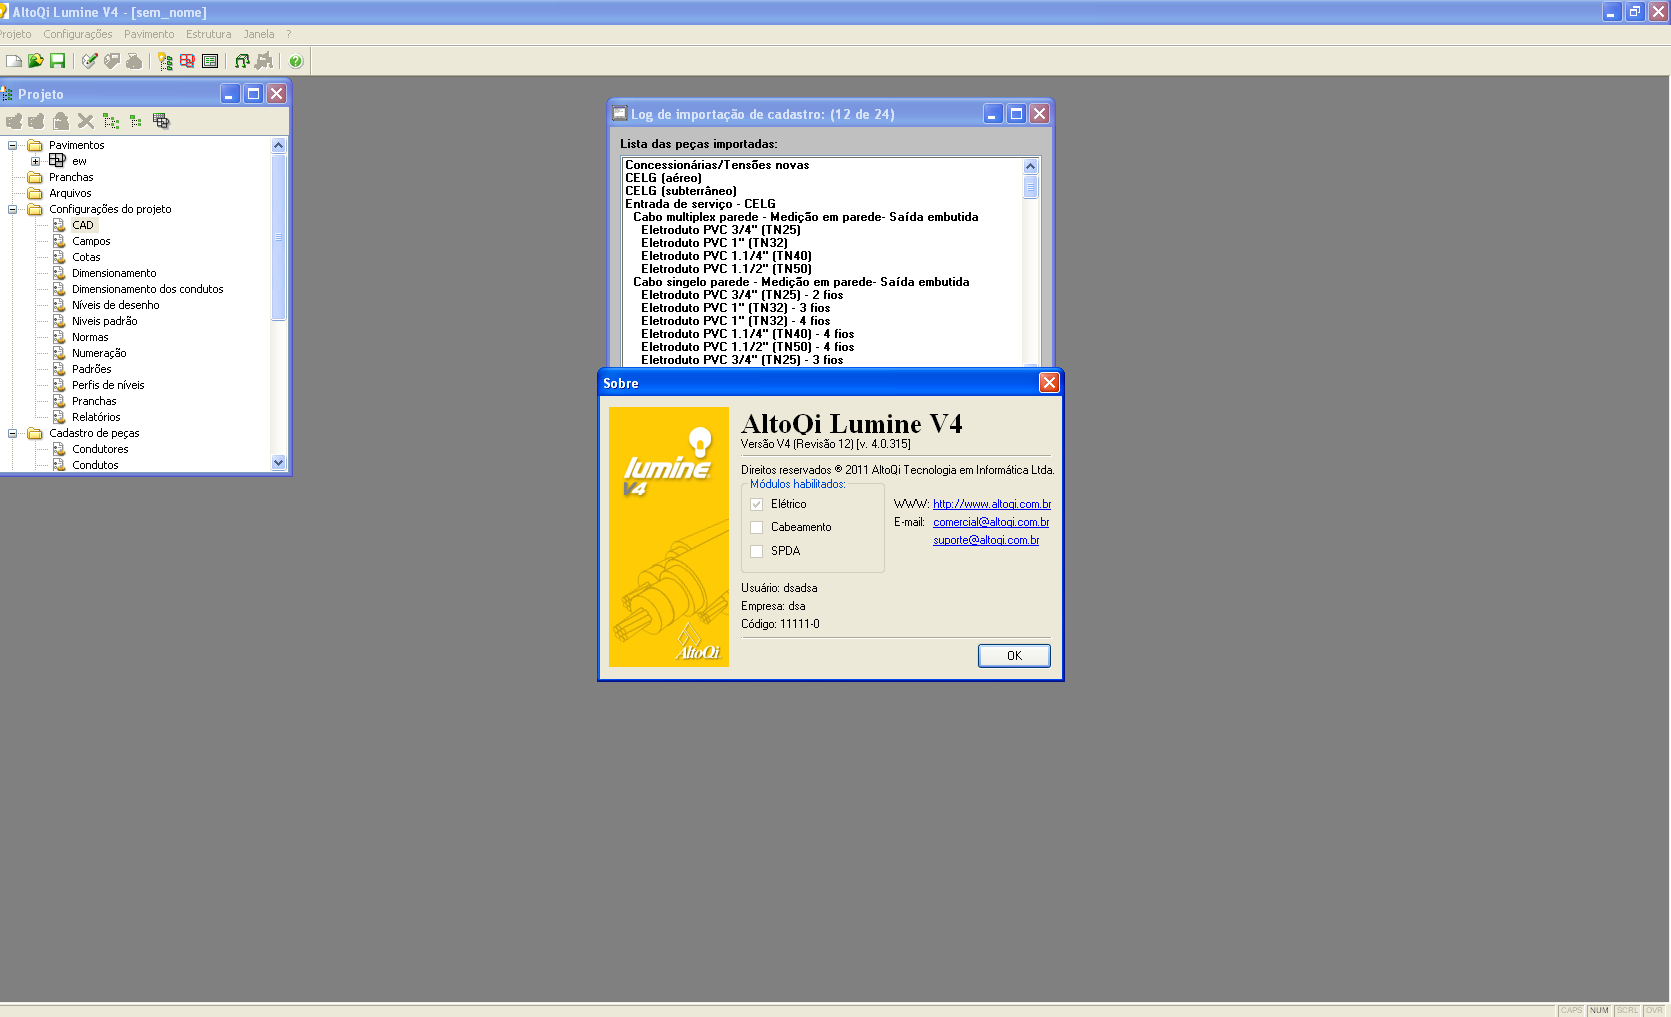 altoqi lumine crackeado windows 7 64 bits download